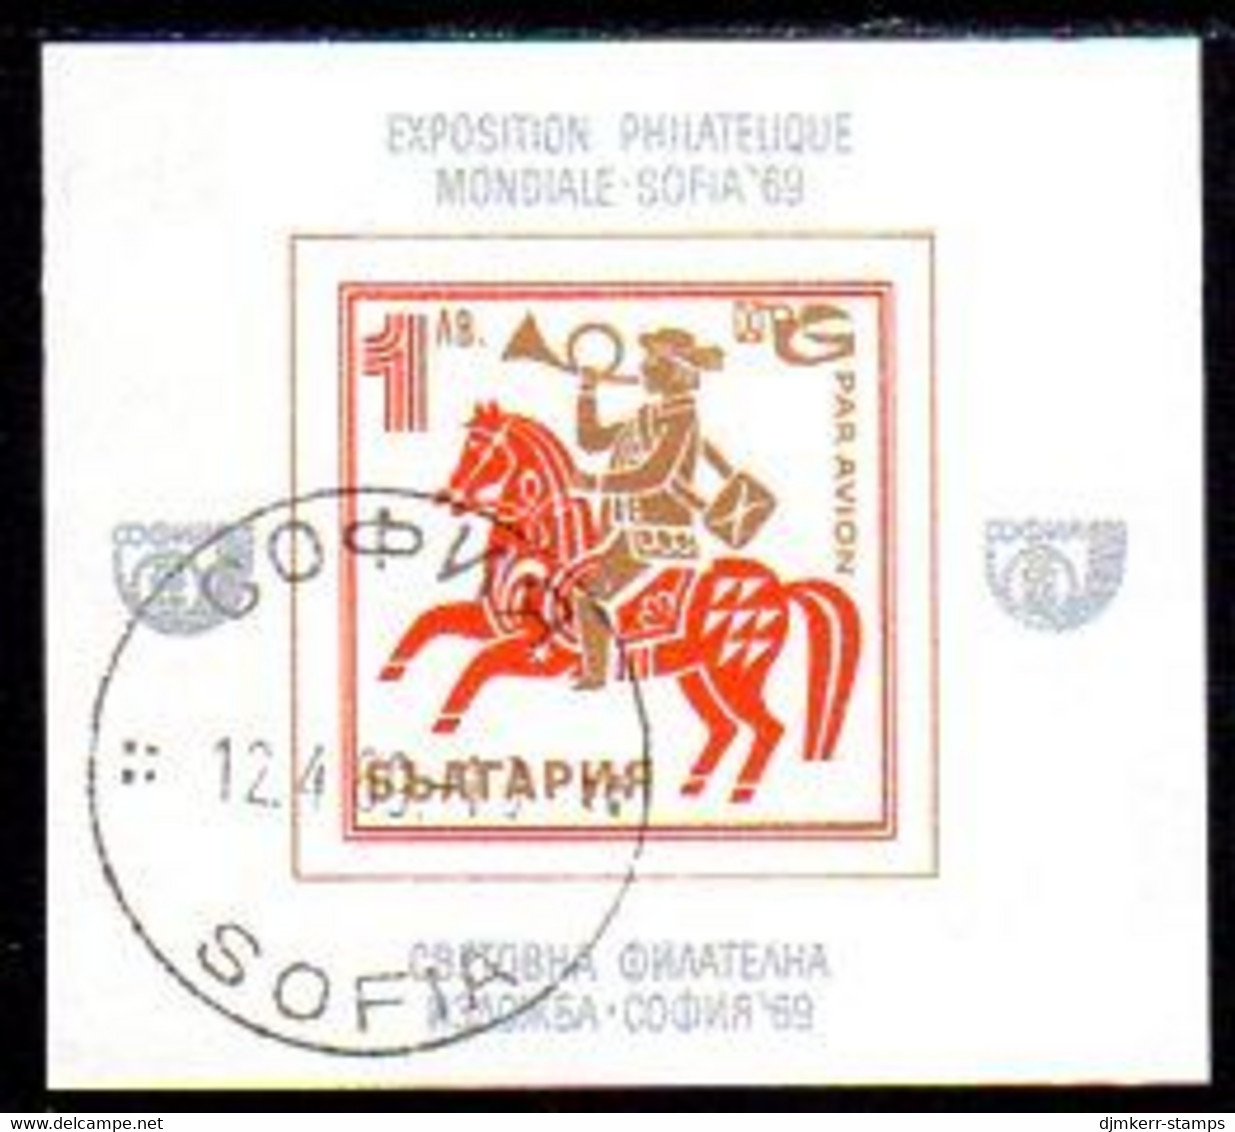 BULGARIA 1969 Transport: Post Rider Block  Used.  Michel Block 24 - Blocs-feuillets